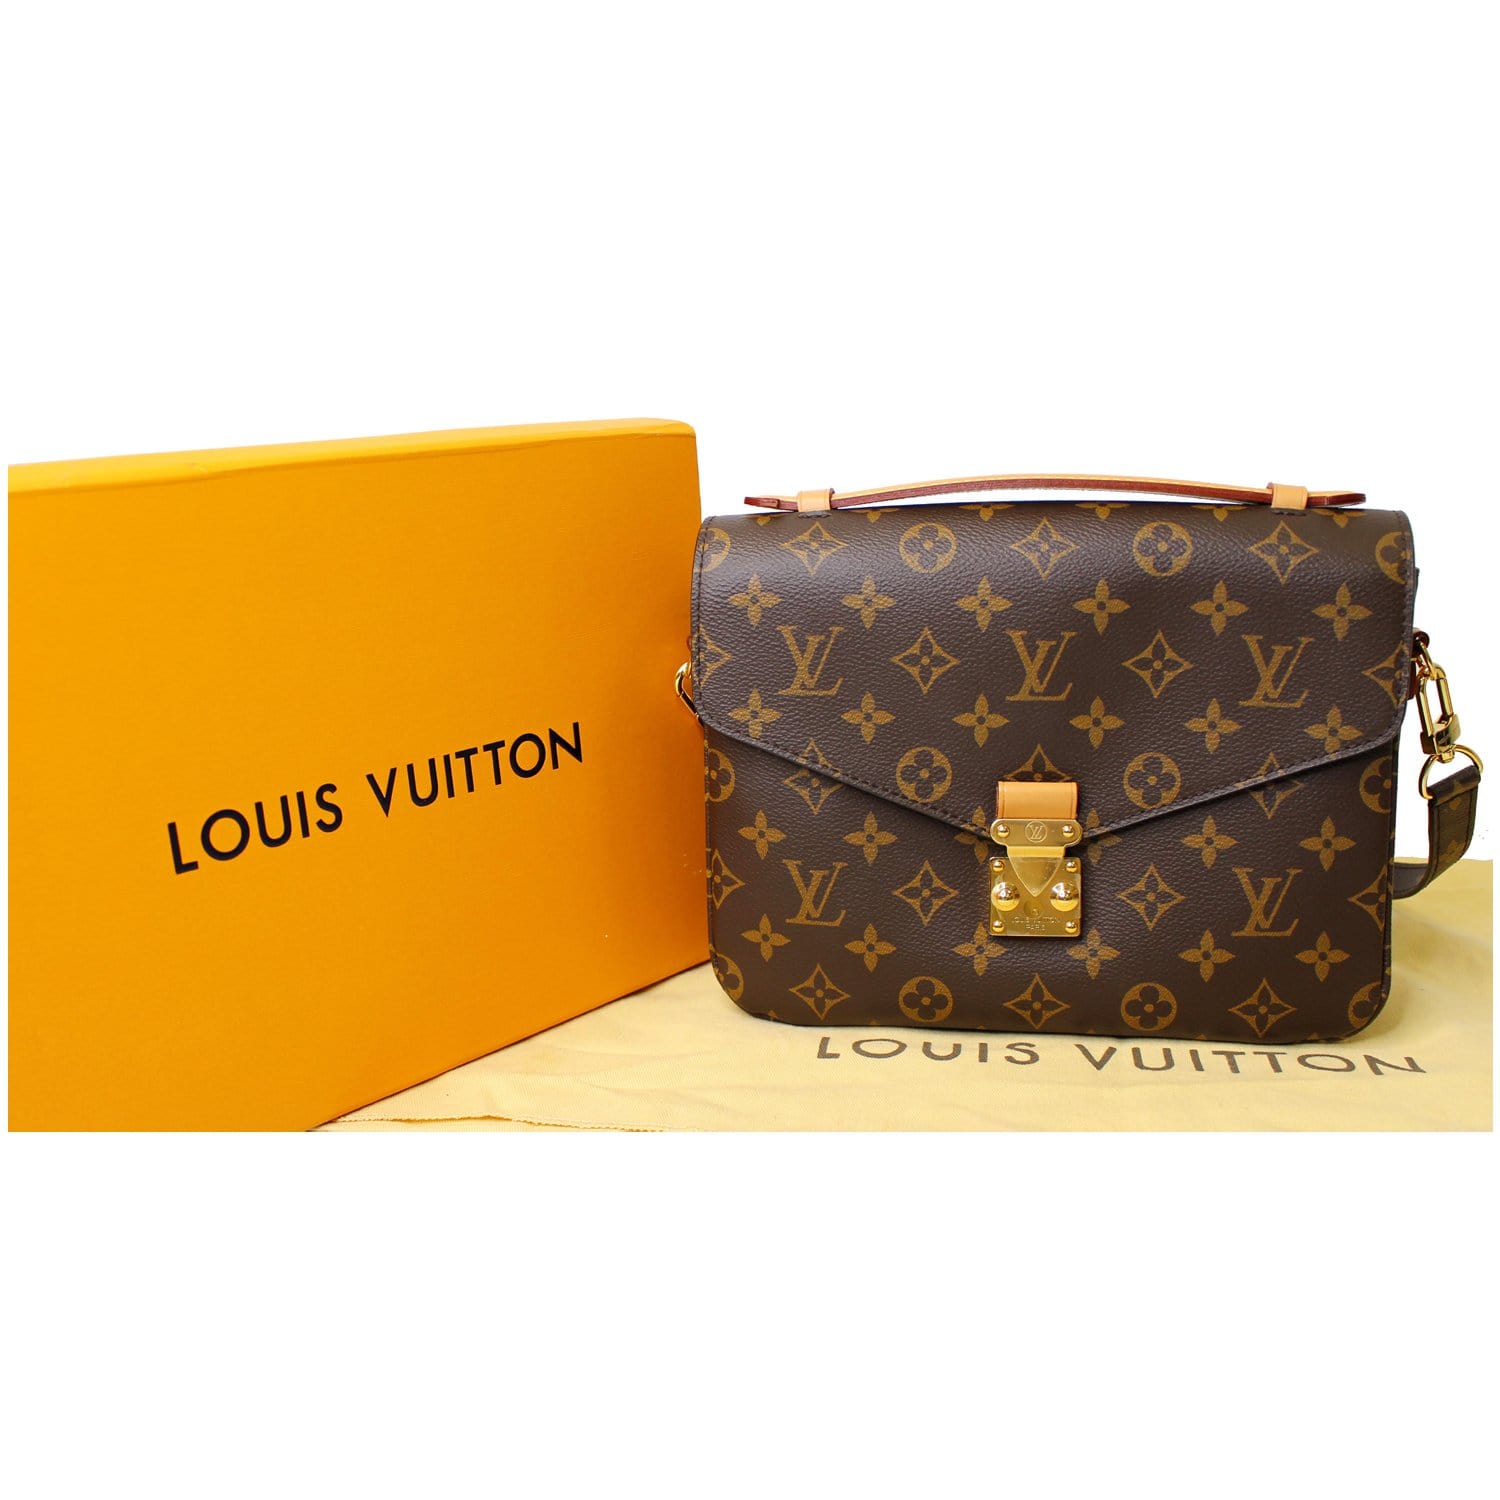 Louis Vuitton Neverfull - willhaben